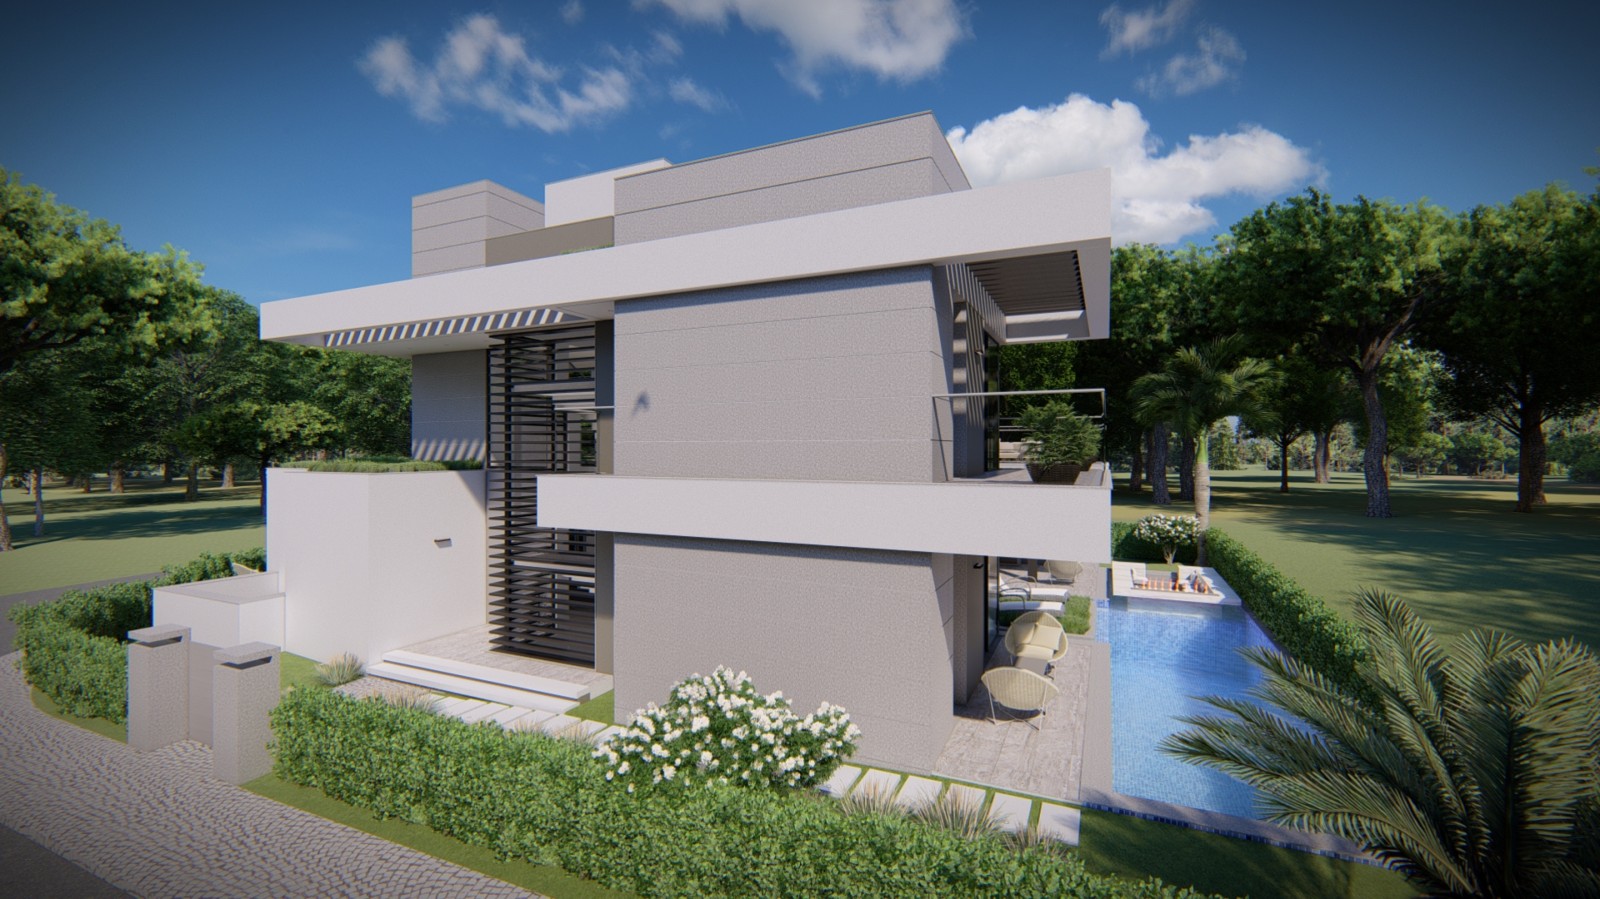 4 Bedroom Villa with pool, under construction, for sale in Vilamoura, Algarve_221372